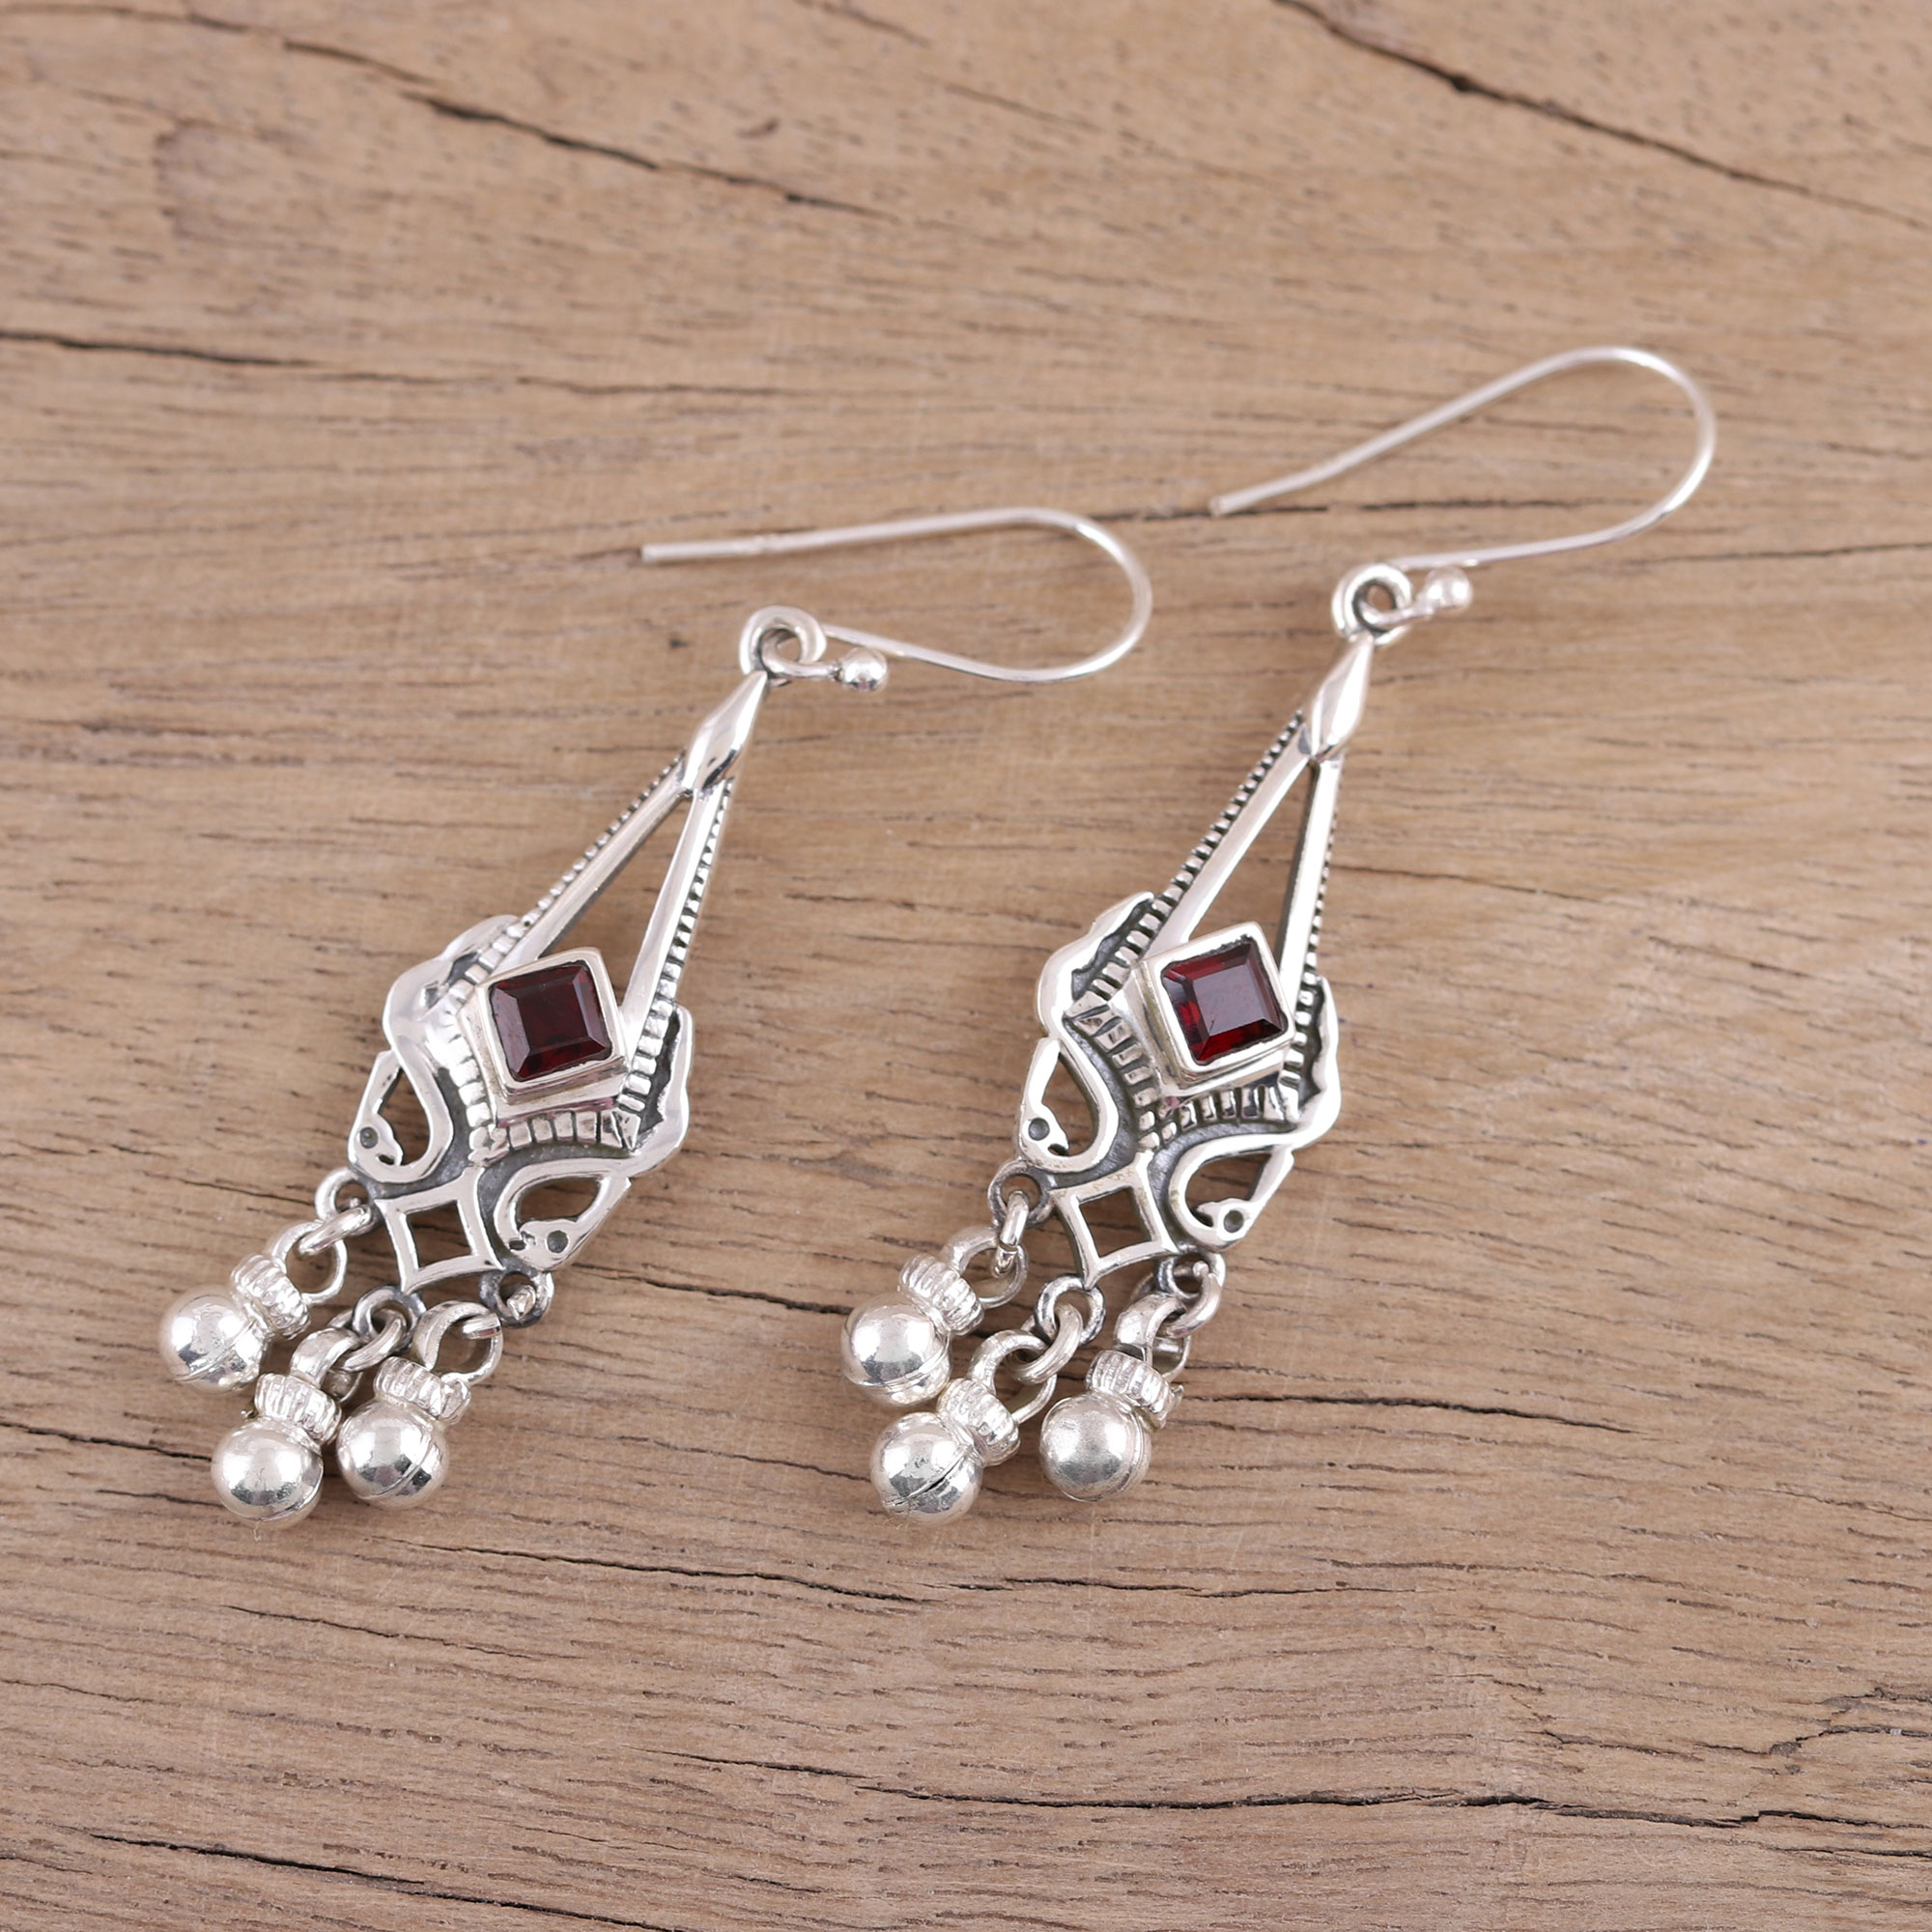 Garnet and Sterling Silver Chandelier Earrings from India - Delightful ...